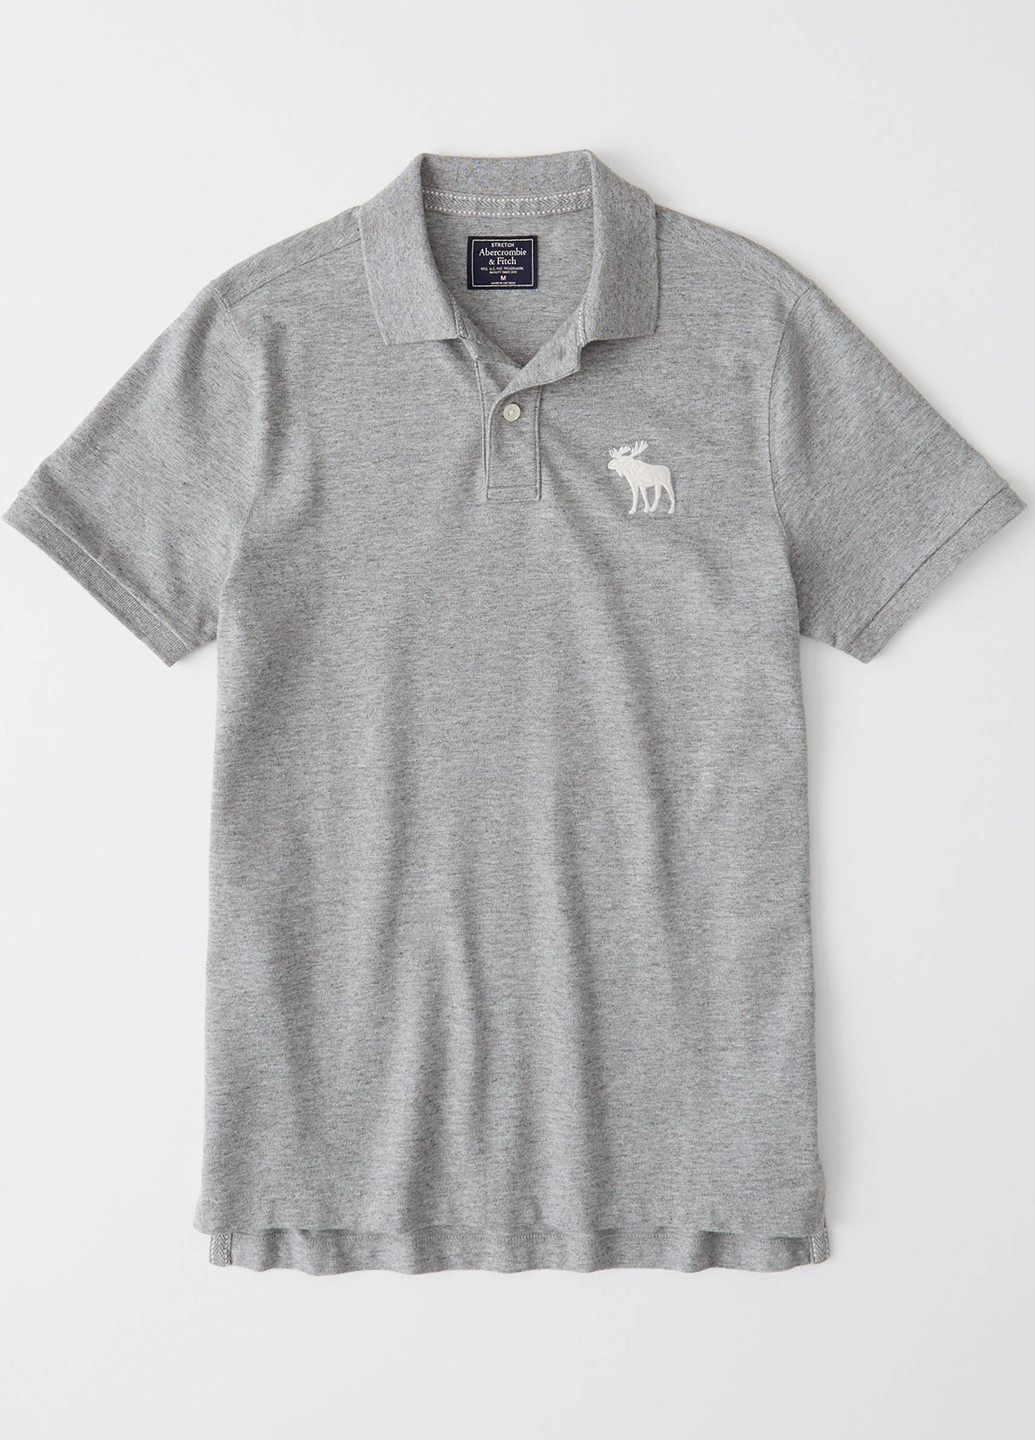 Серая футболка-поло для мужчин Abercrombie & Fitch с логотипом